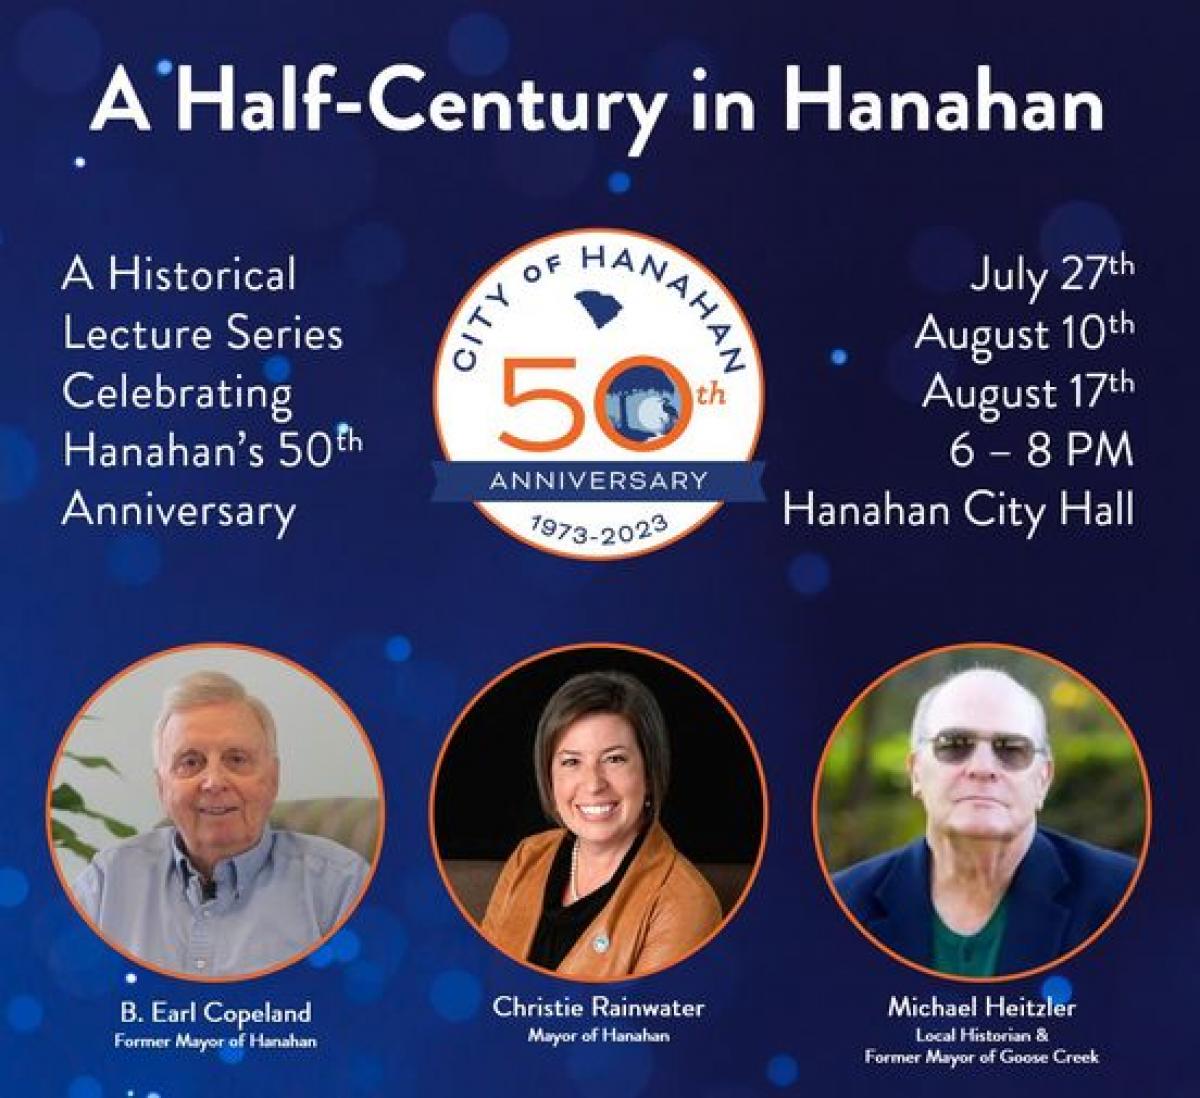 A Half-Century in Hanahan